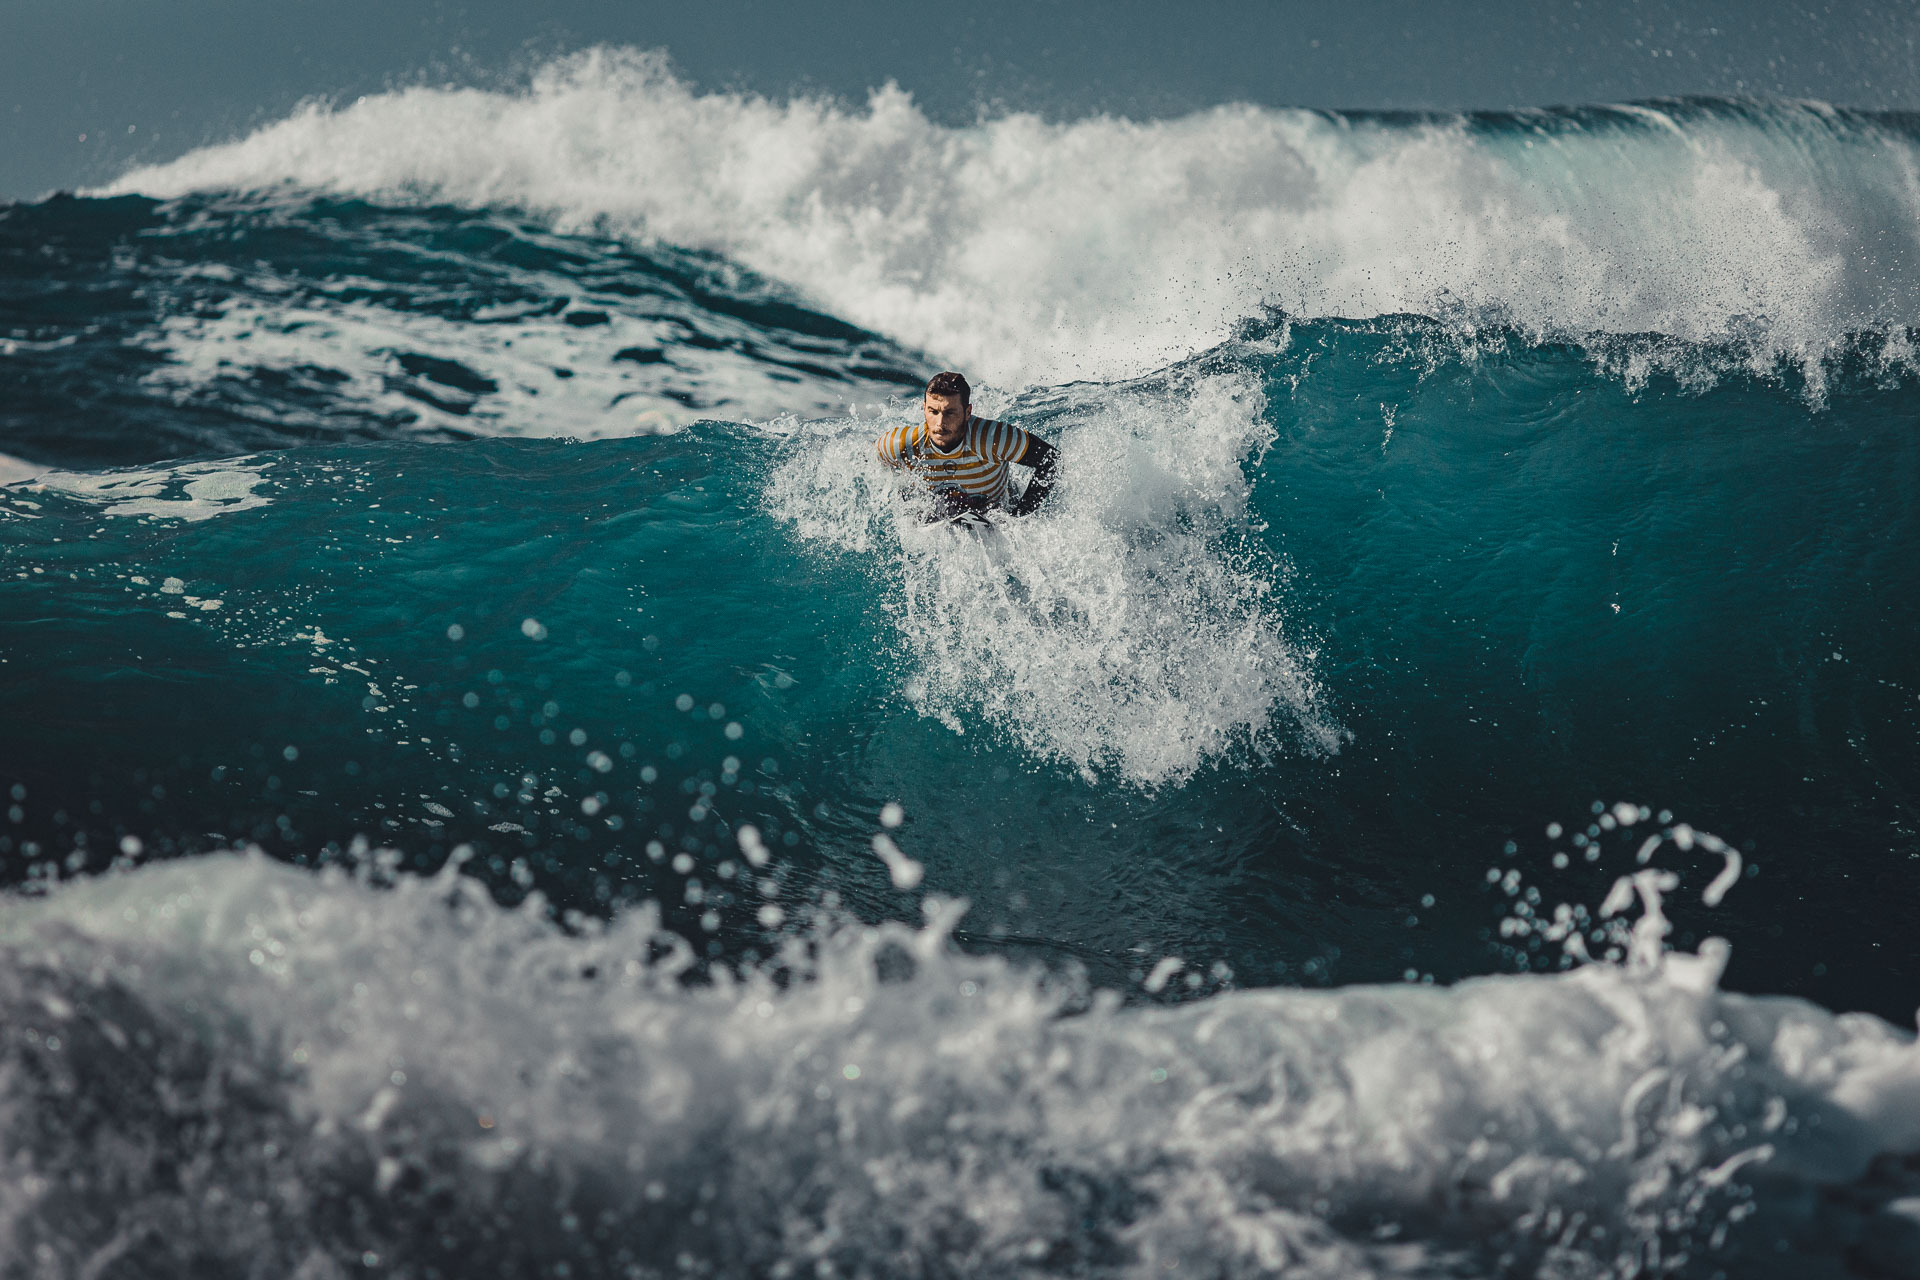 Professional surfer Jack Freestone (Australia) launching a pop up